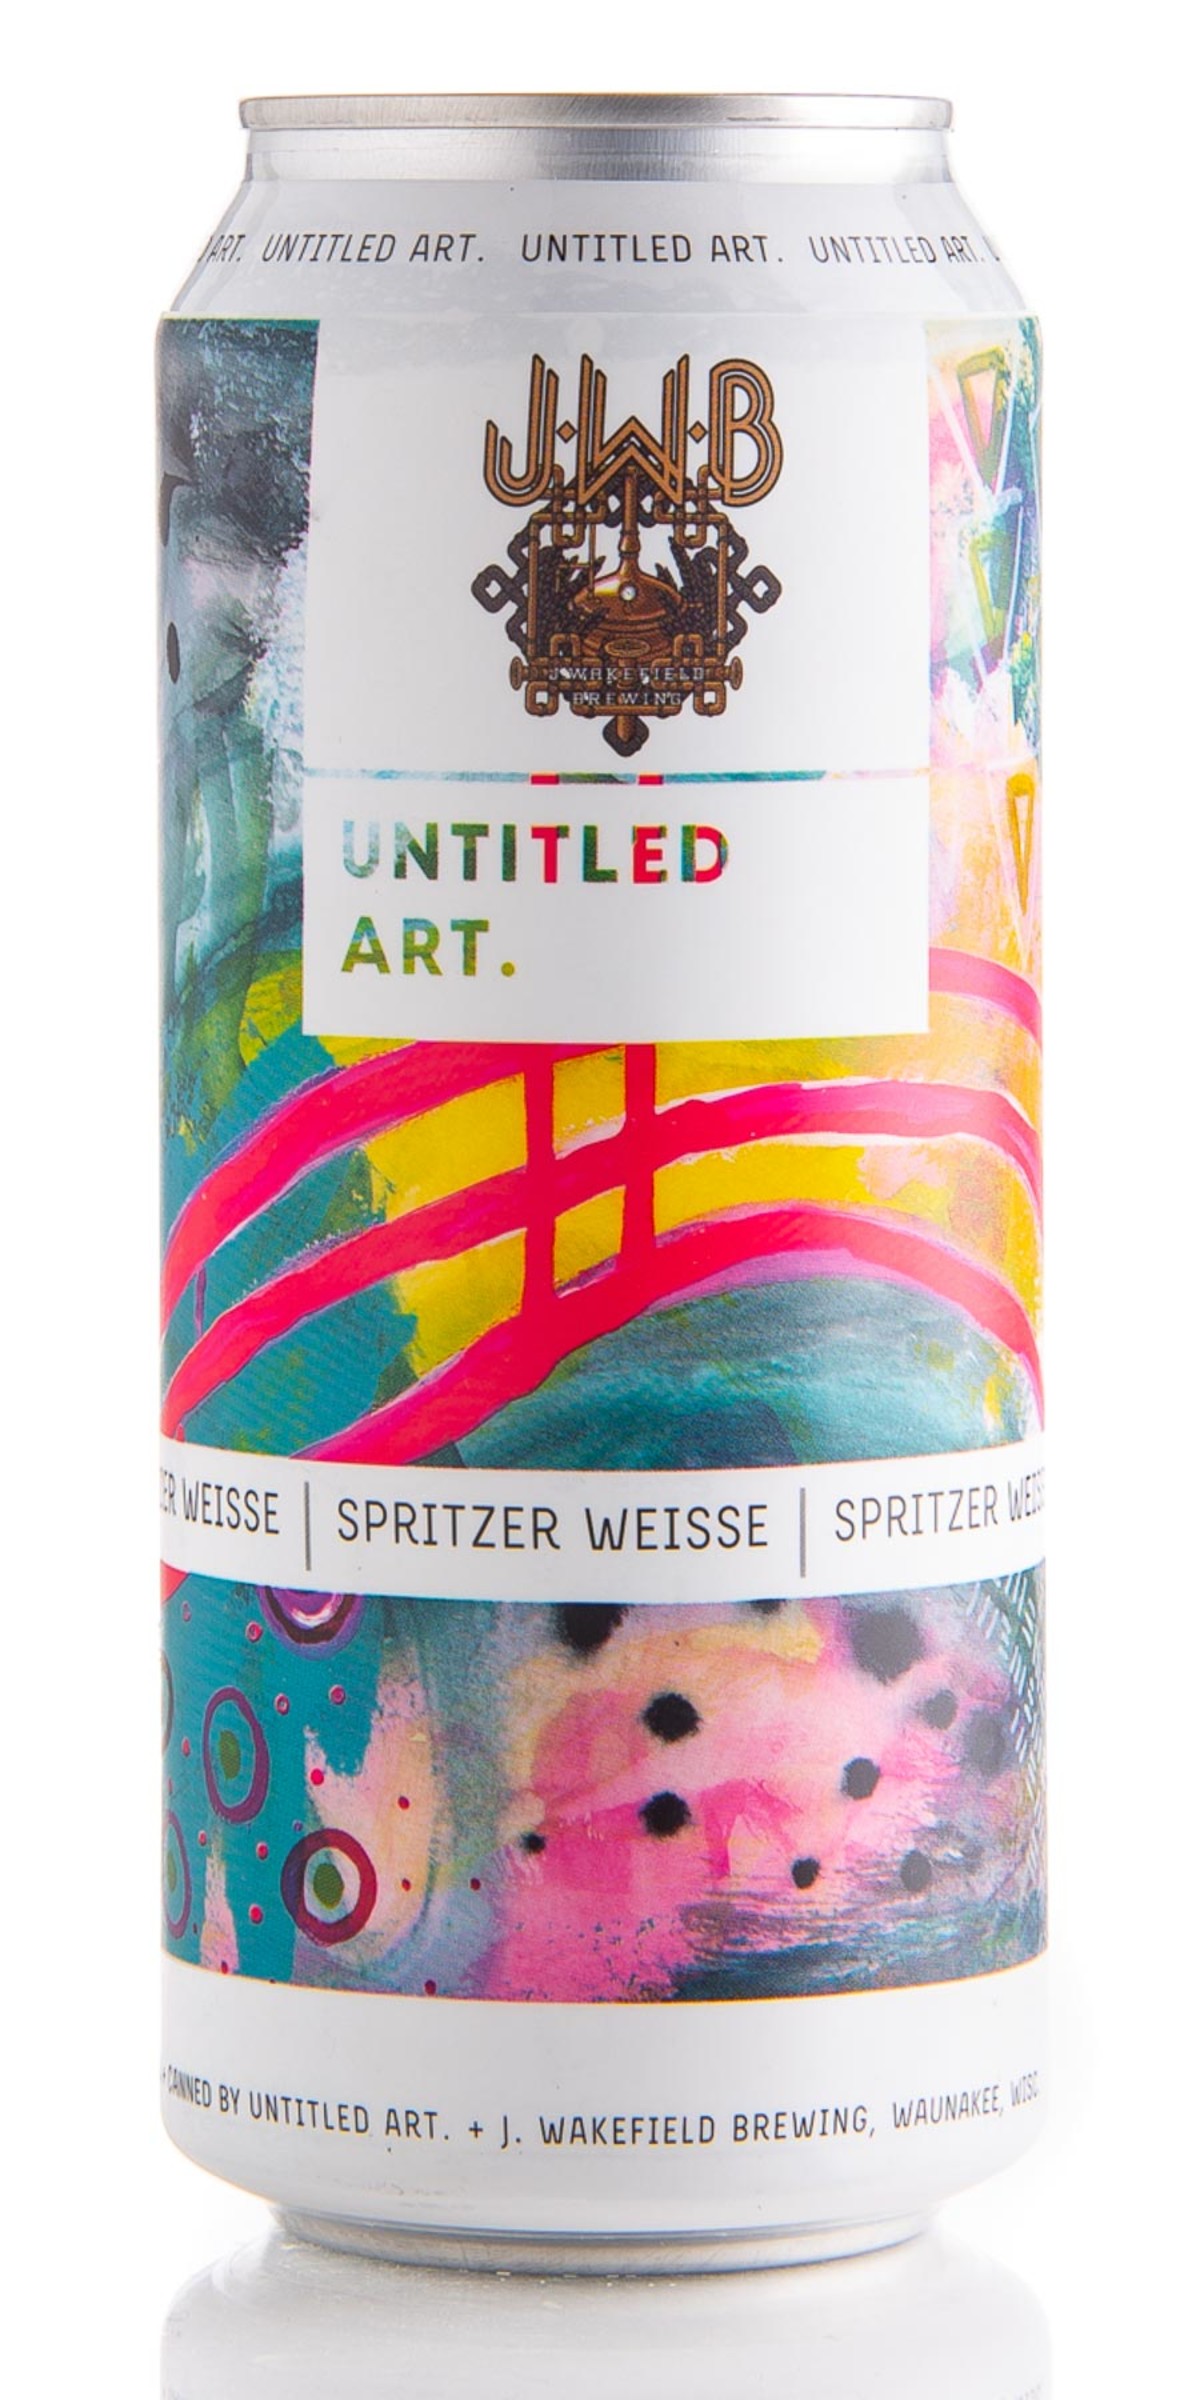 Review Untitled Art Spritzer Weisse Craft Beer Brewing